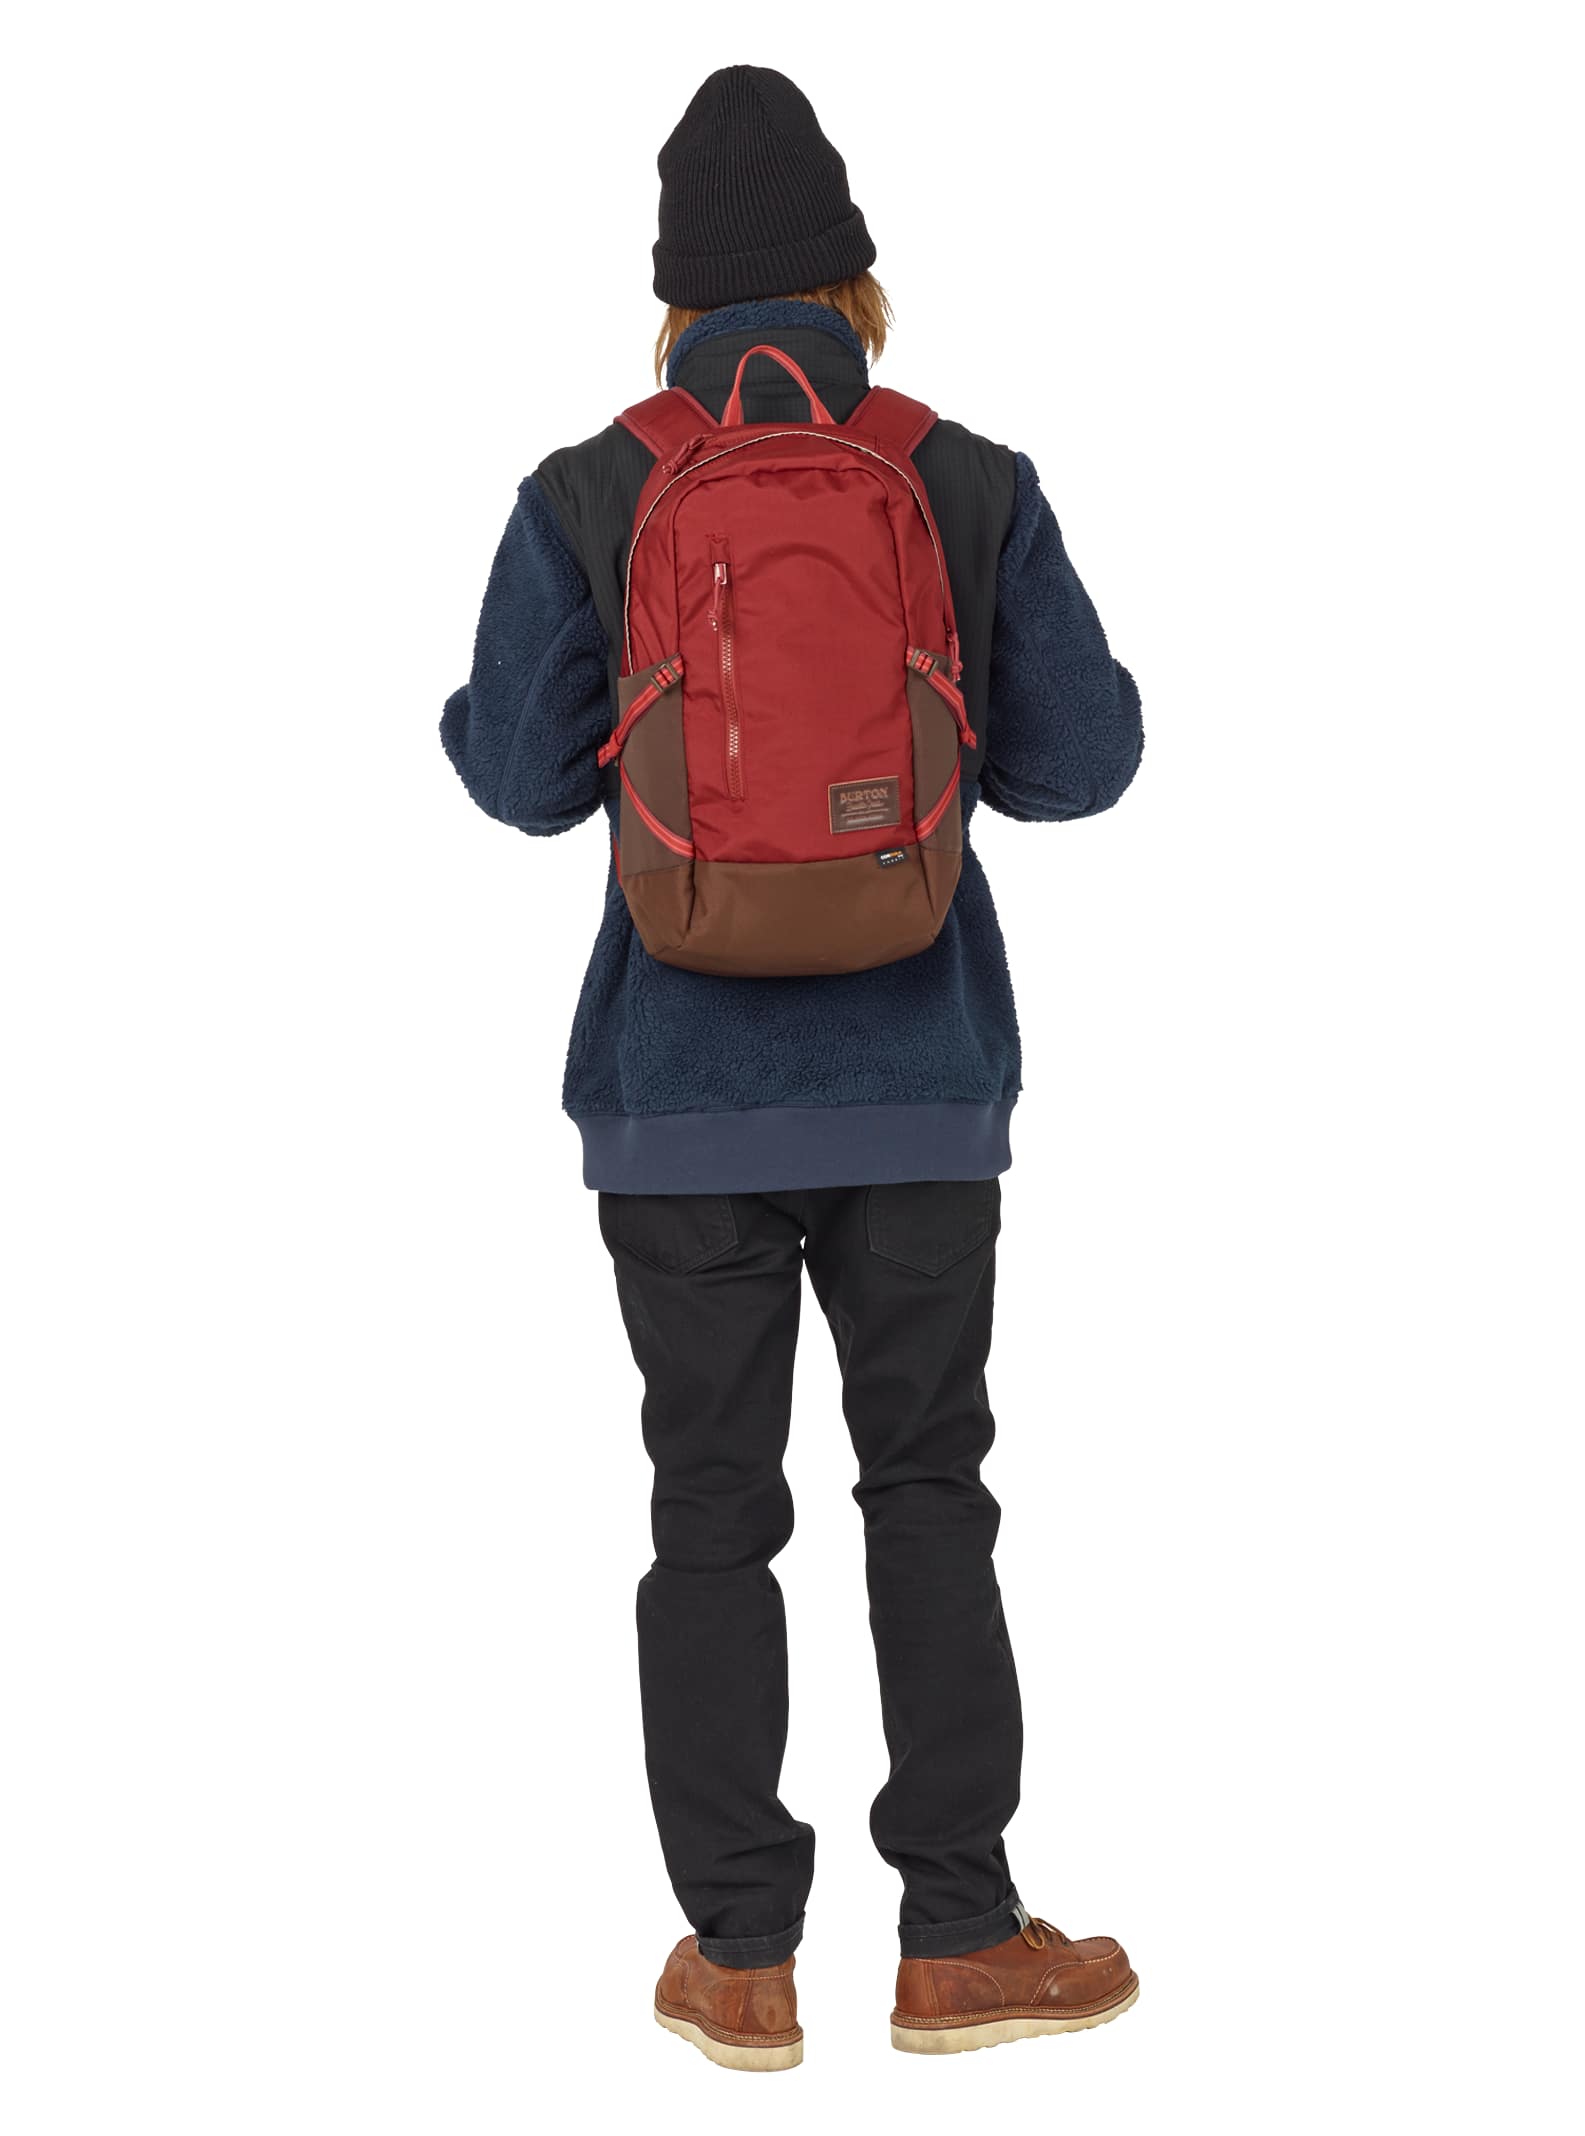 Burton Prospect Backpack | Burton Snowboards Fall 2017 JP